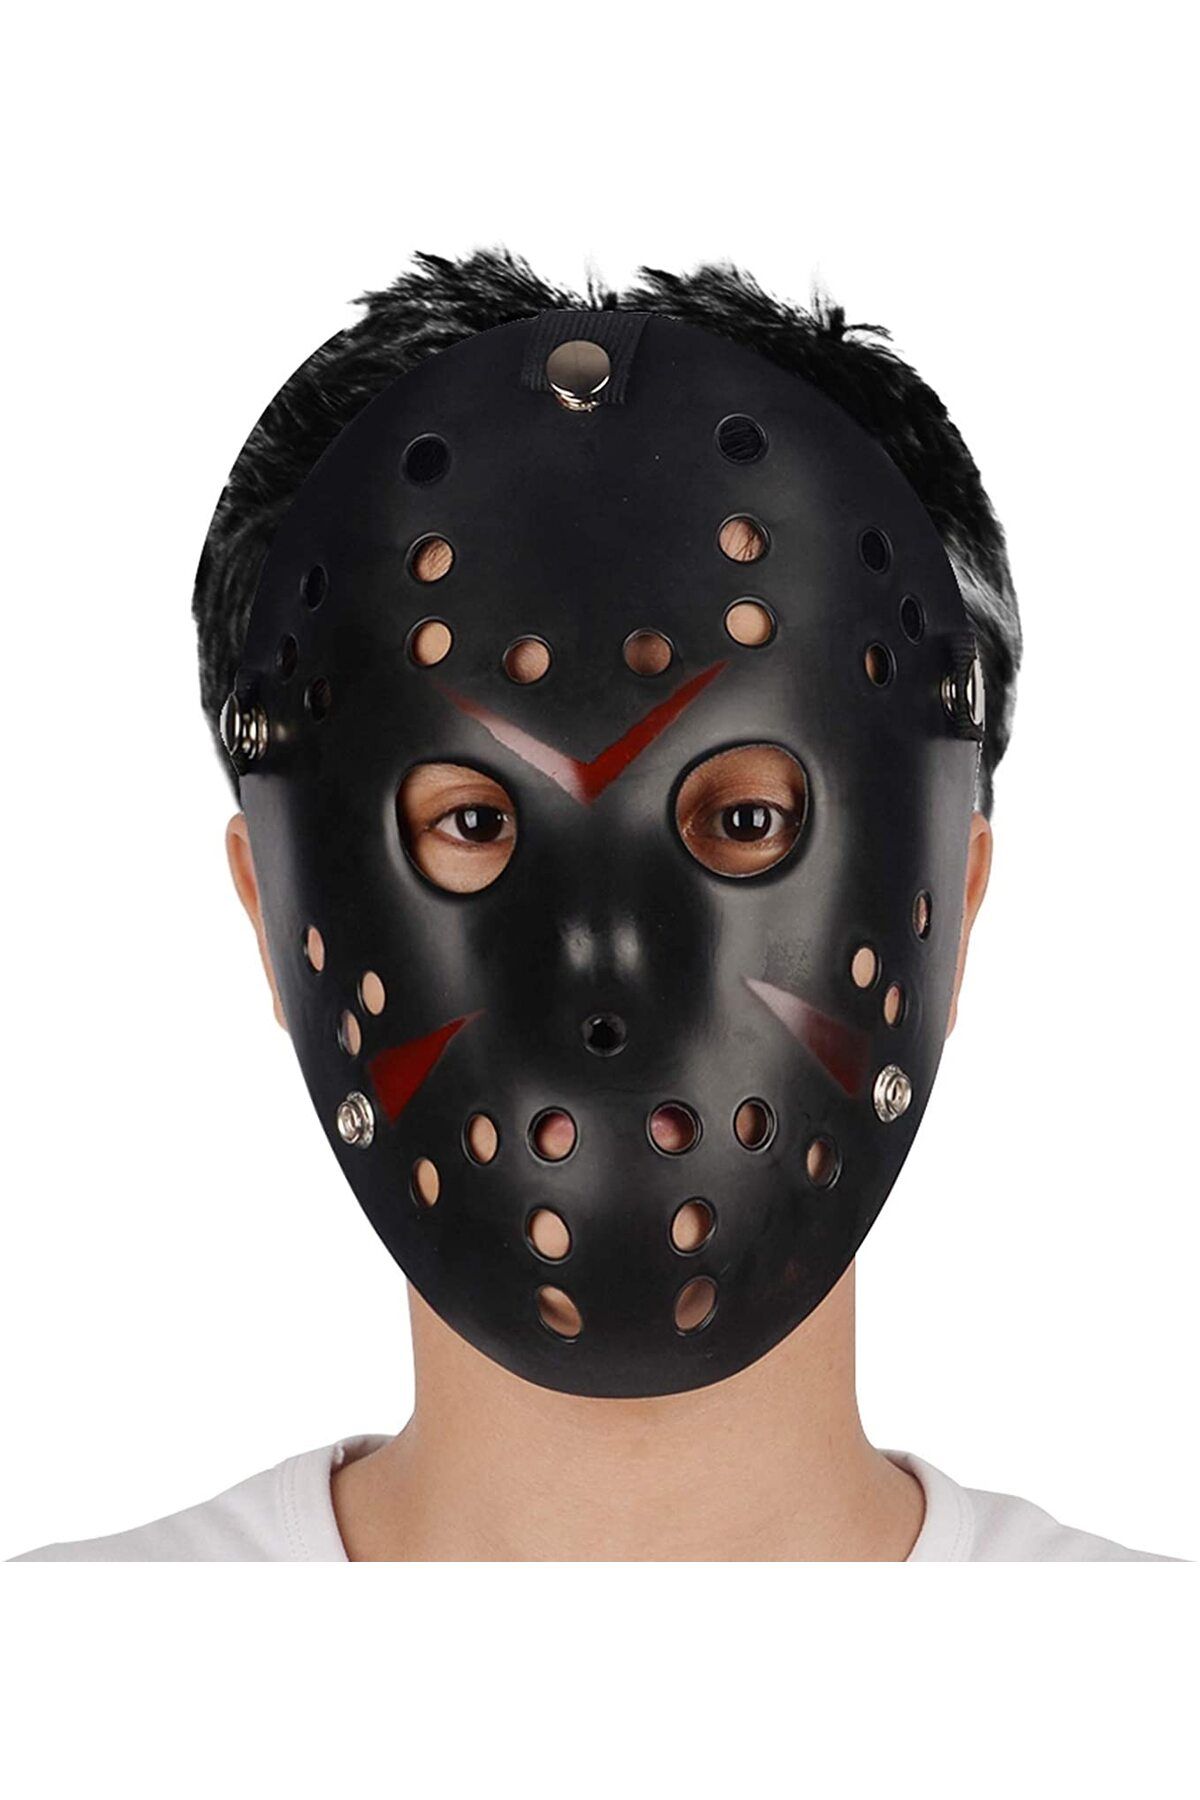 Go İthalat Siyah Renk Kırmızı Çizgili Tam Yüz Hokey Jason Maskesi Hannibal Maskesi (4199)